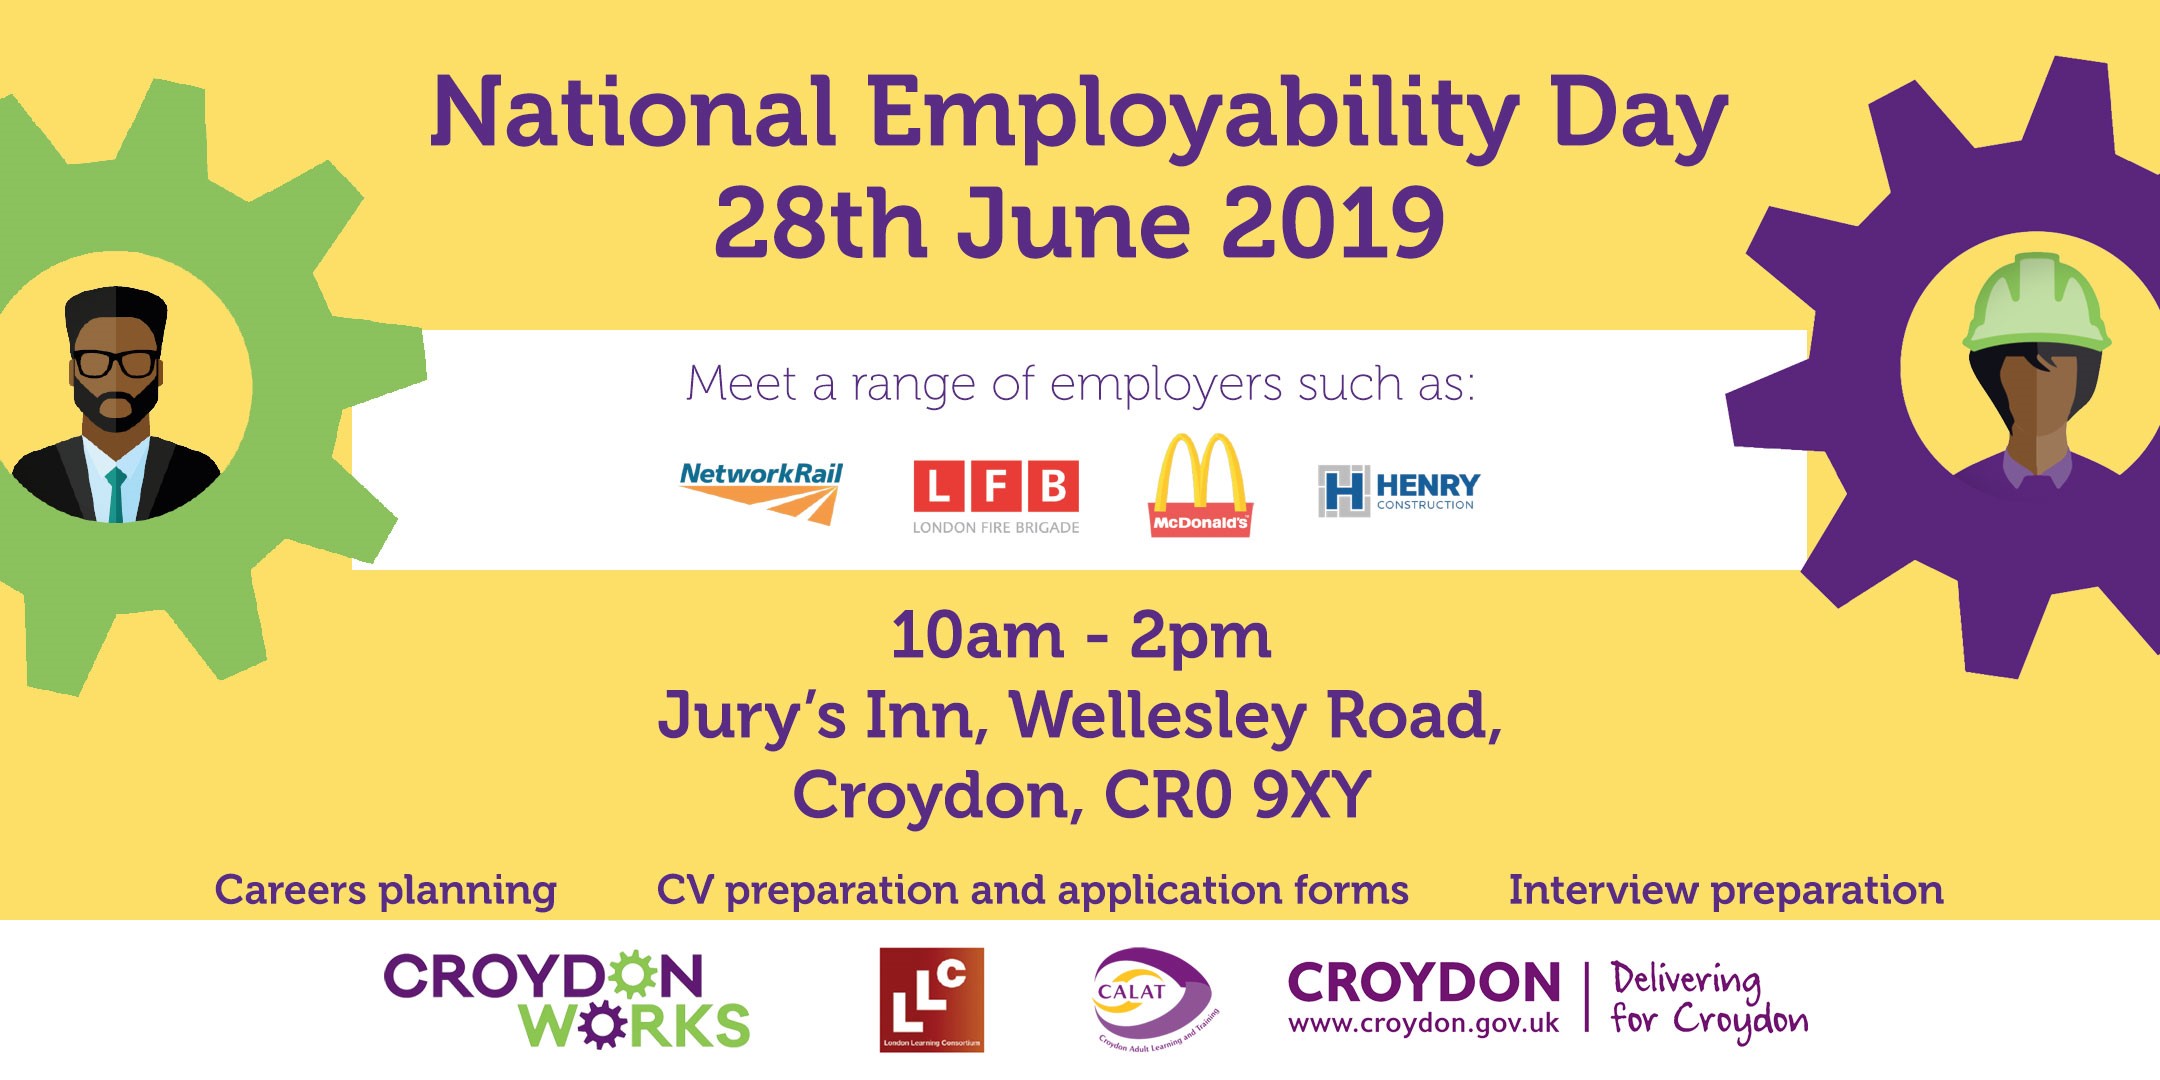 National Employability Day 2019